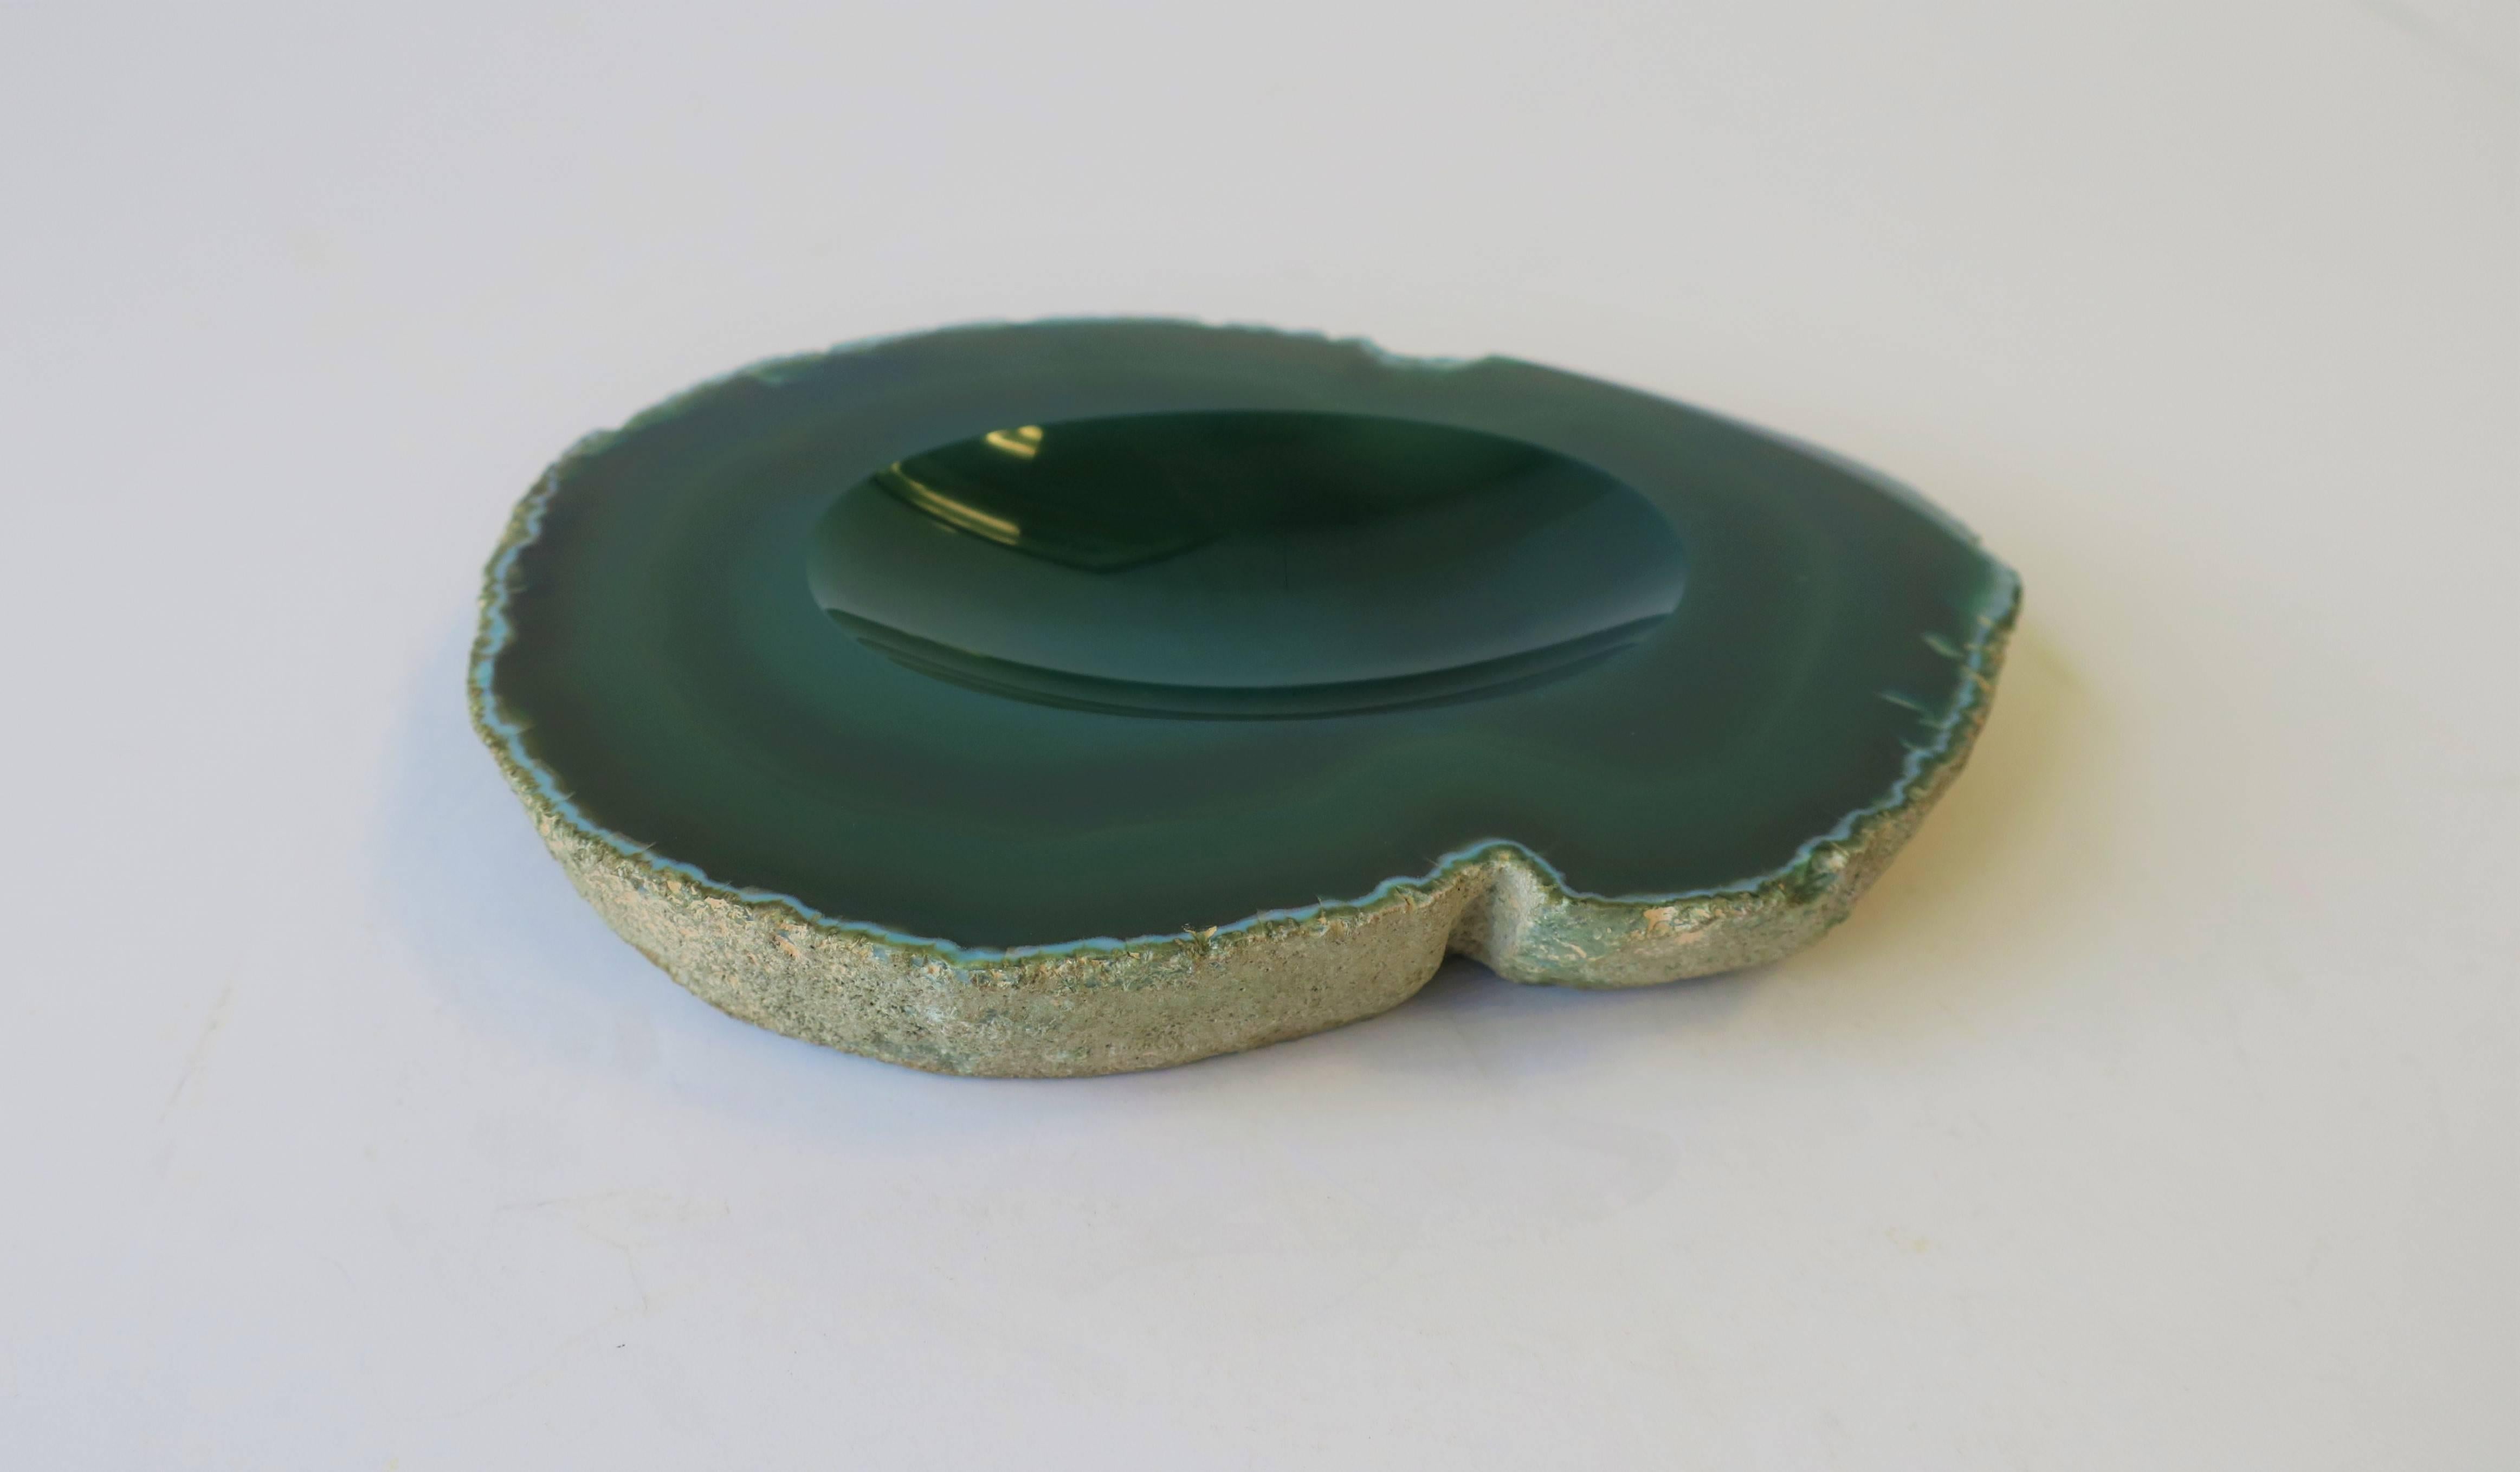 Vintage Emerald Green Agate Geode Vessel Bowl or Decorative Object 2